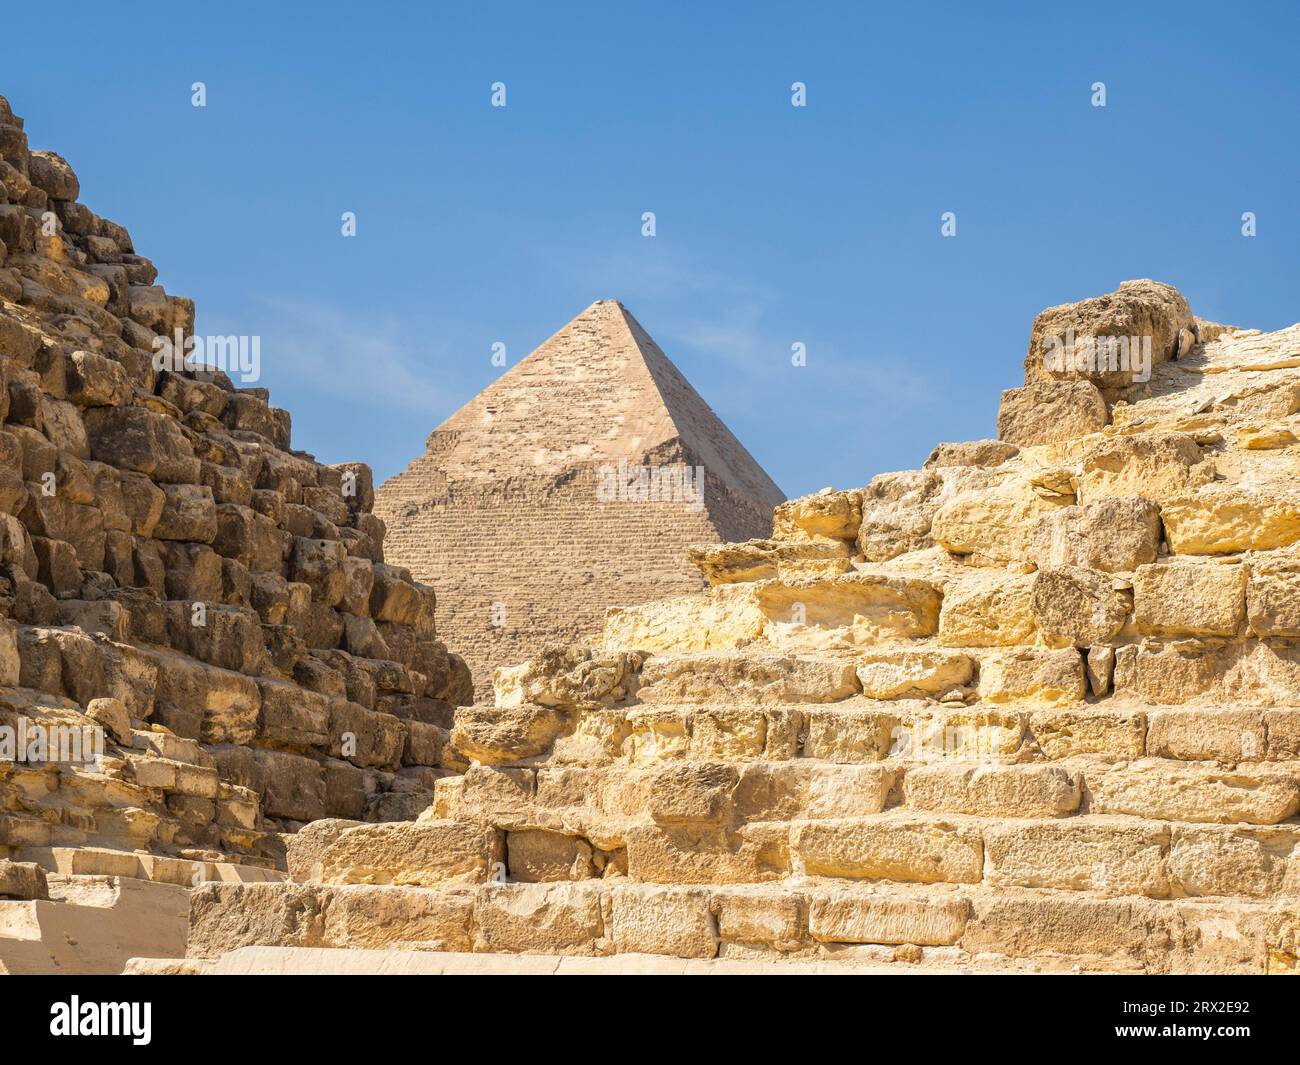 Pyramid of Khafre, UNESCO World Heritage Site, near Cairo, Egypt, North Africa, Africa Stock Photo